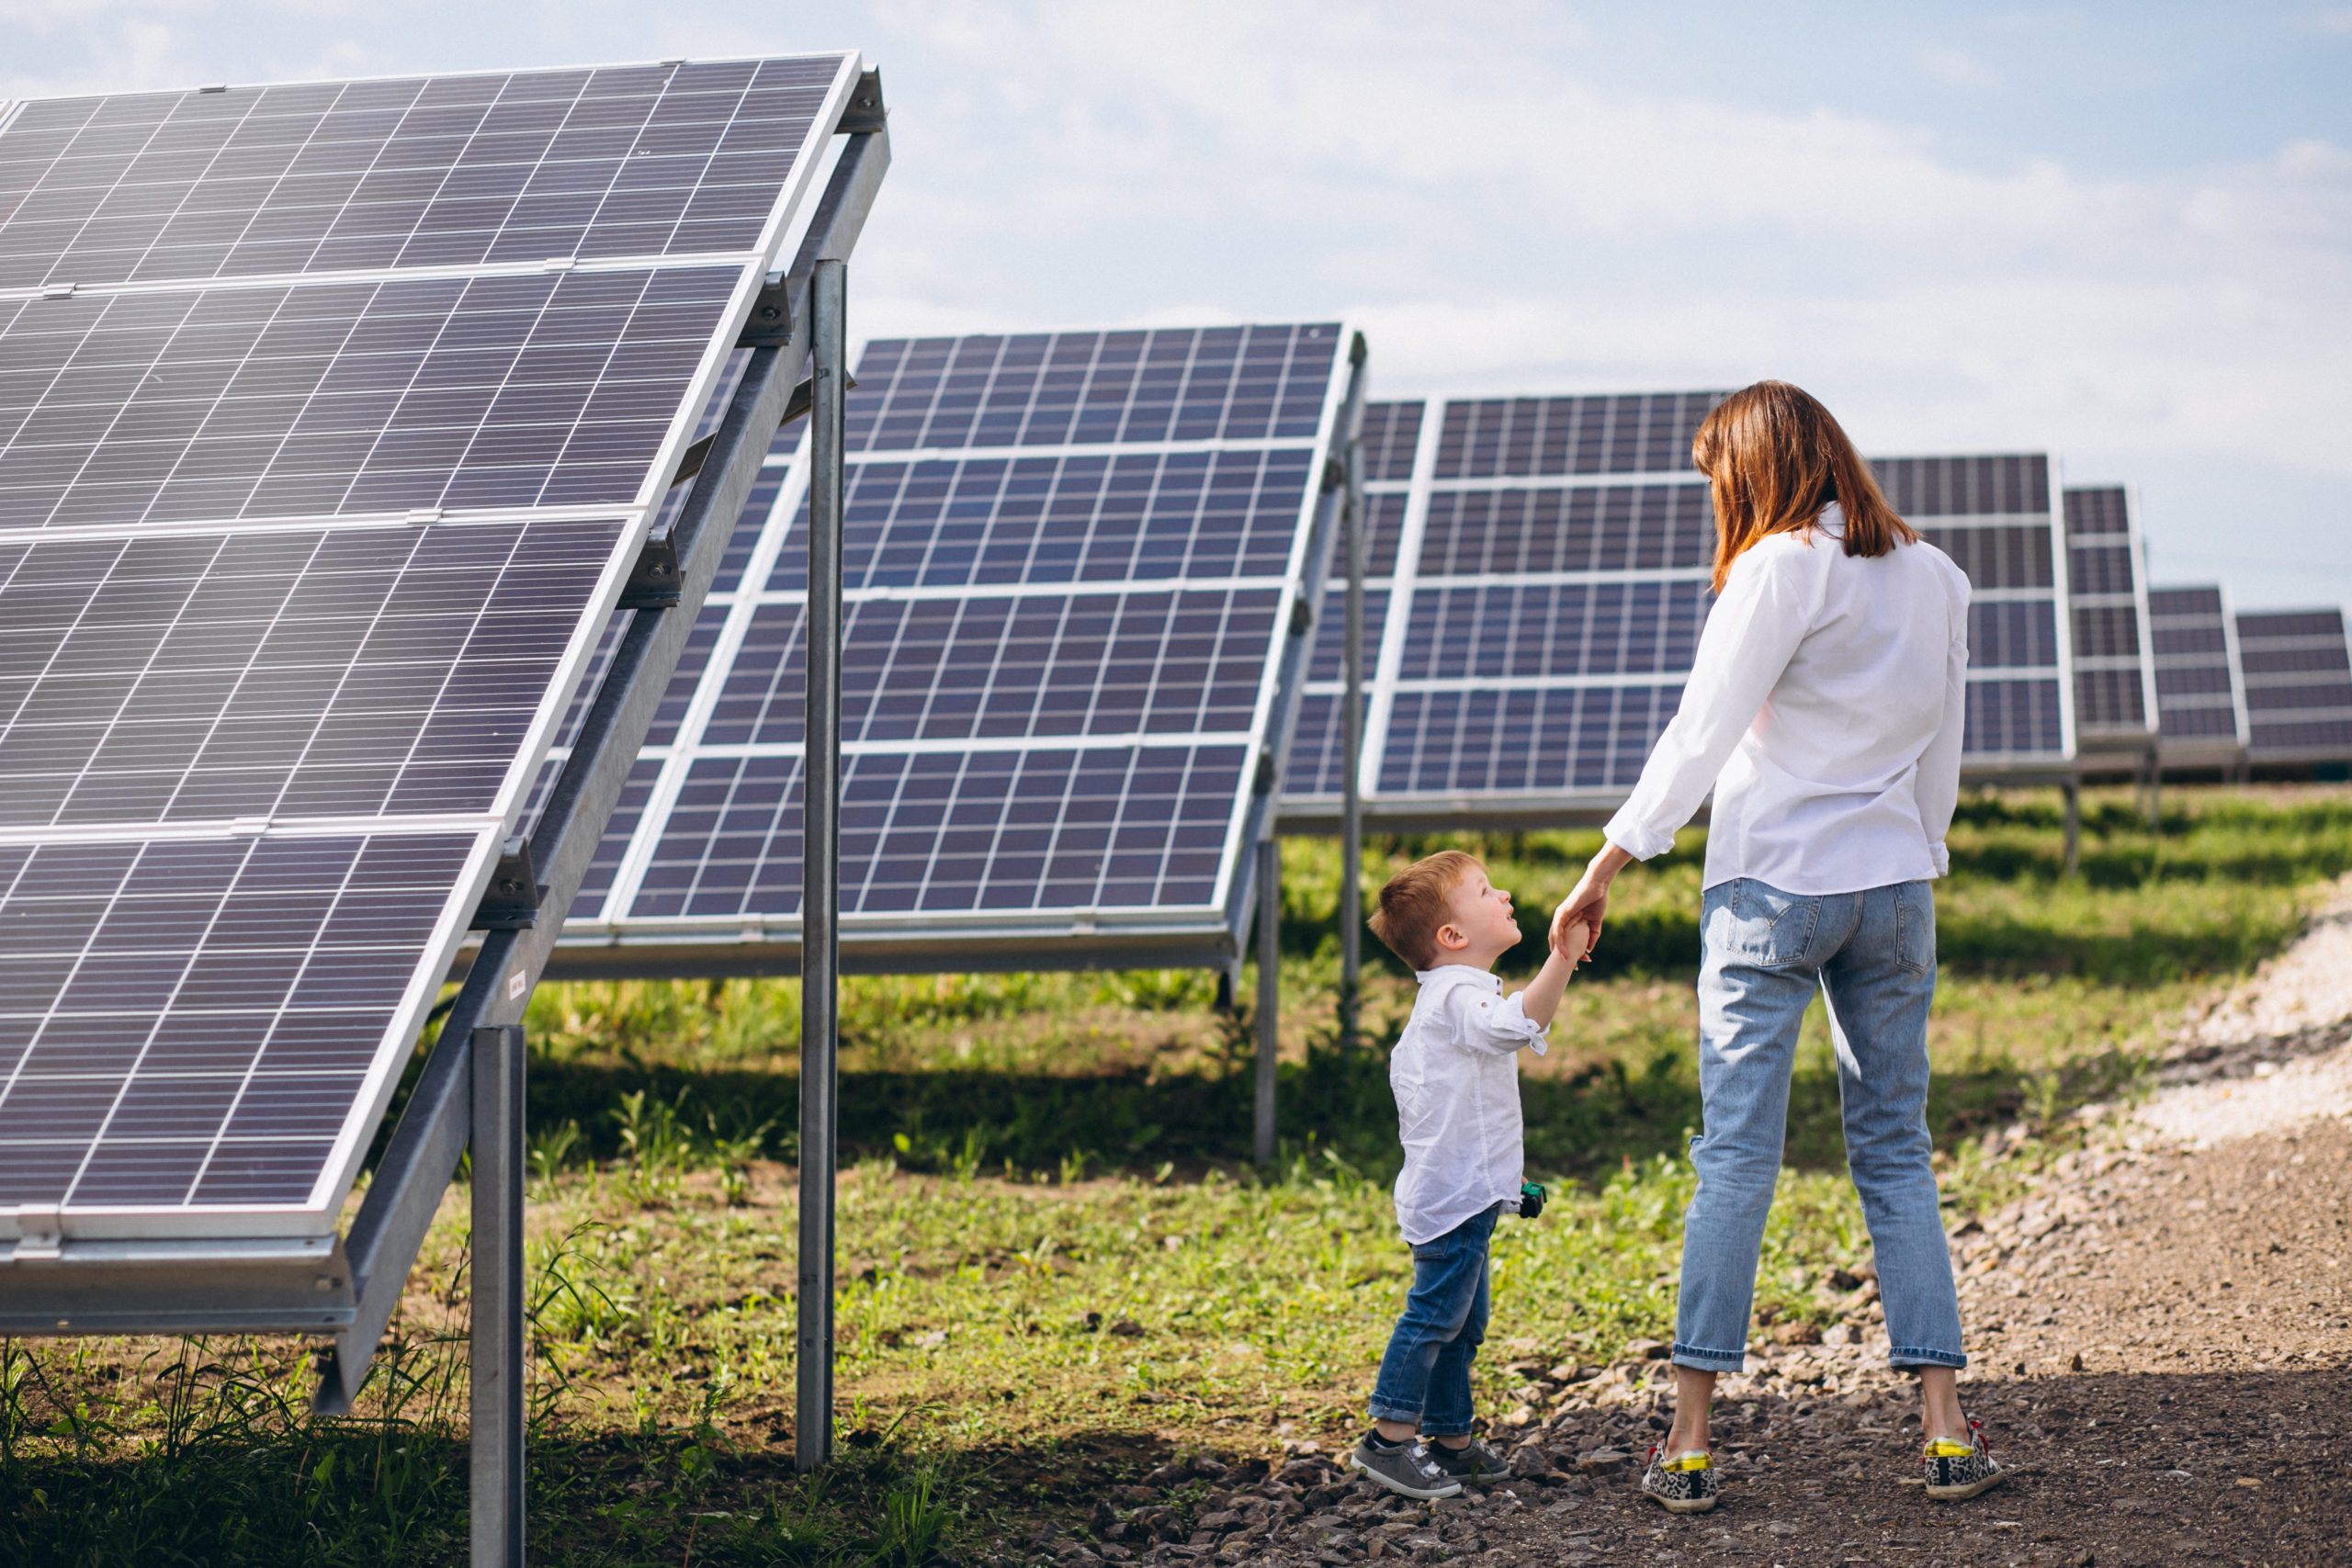 installation-photovoltaique-durable-investissement-entreprise-particulier-futur-environnement-energie-solaire-sunteam